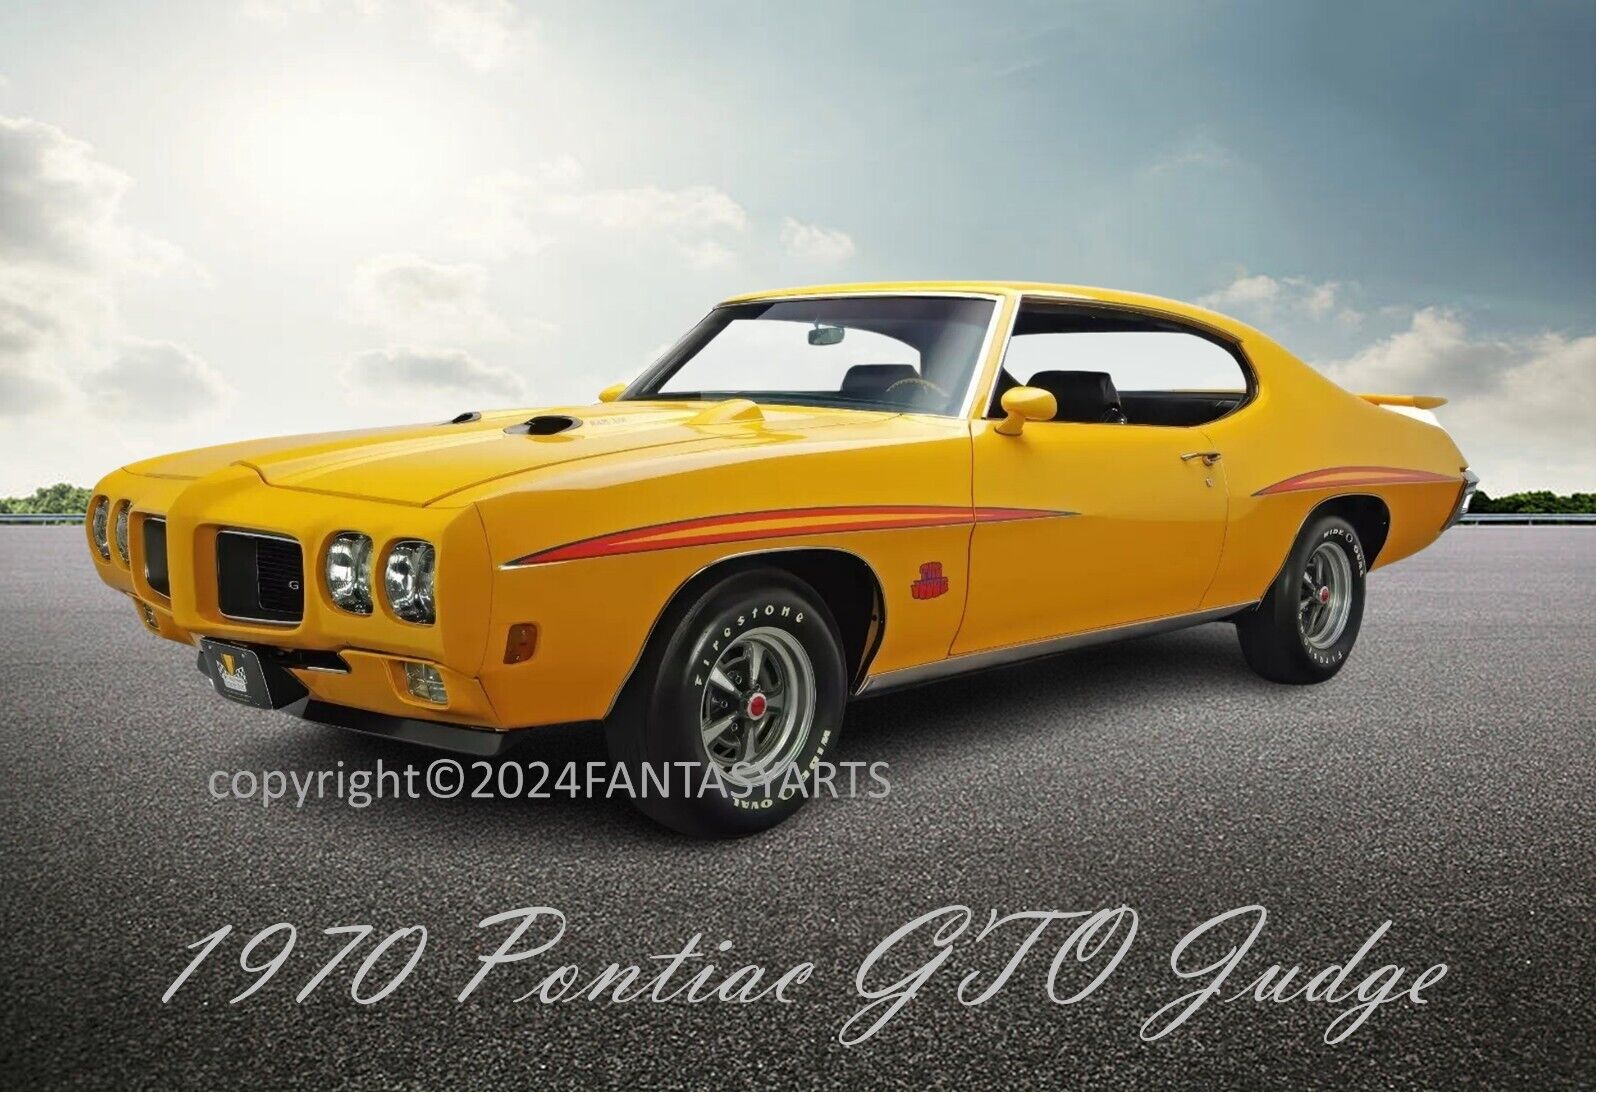 1970 Pontiac GTO Judge Yellow Large Poster Sized Glossy Photo Print 11\